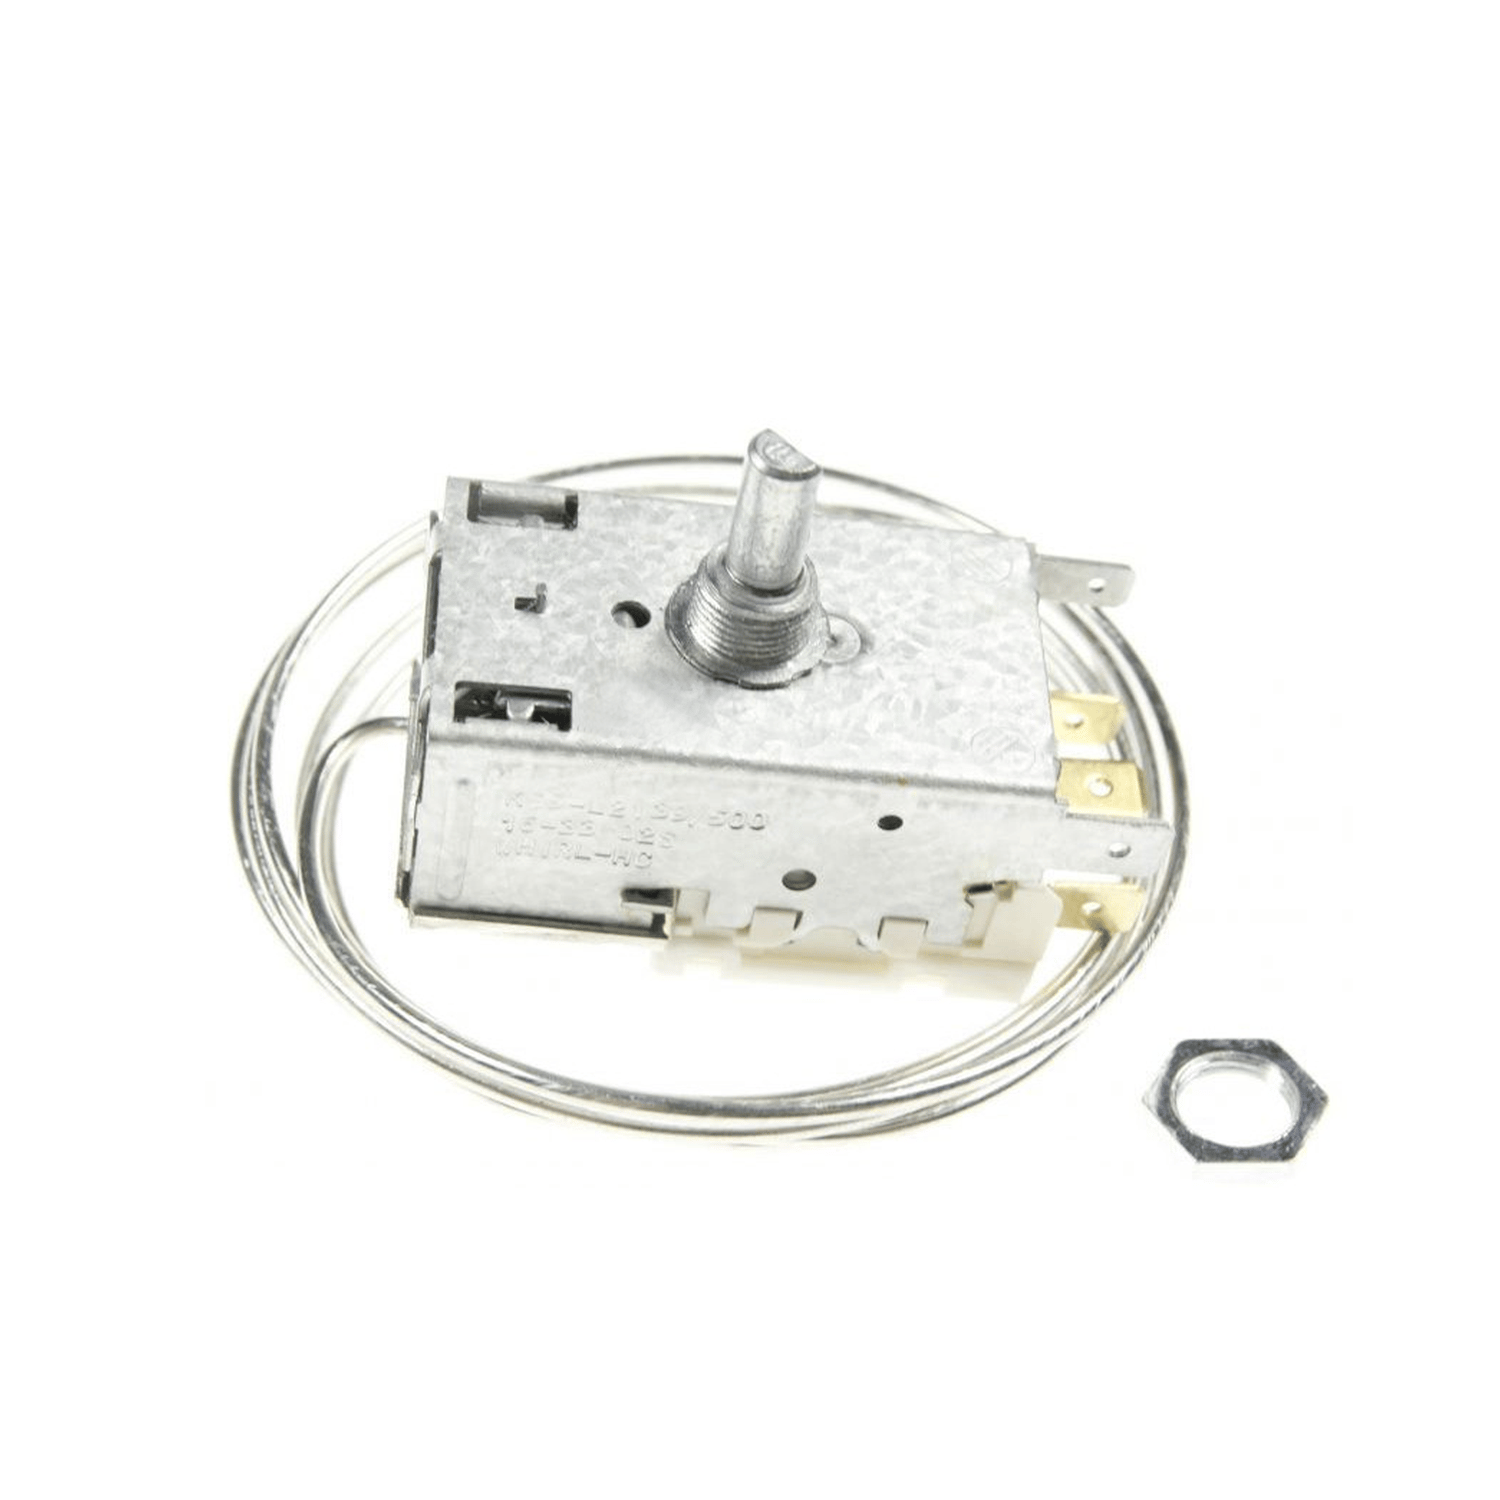 Thermostat Ranco K59-L2139500 for ROBERTSHAW refrigerator, L 1530 mm, 4.8 mm AMP